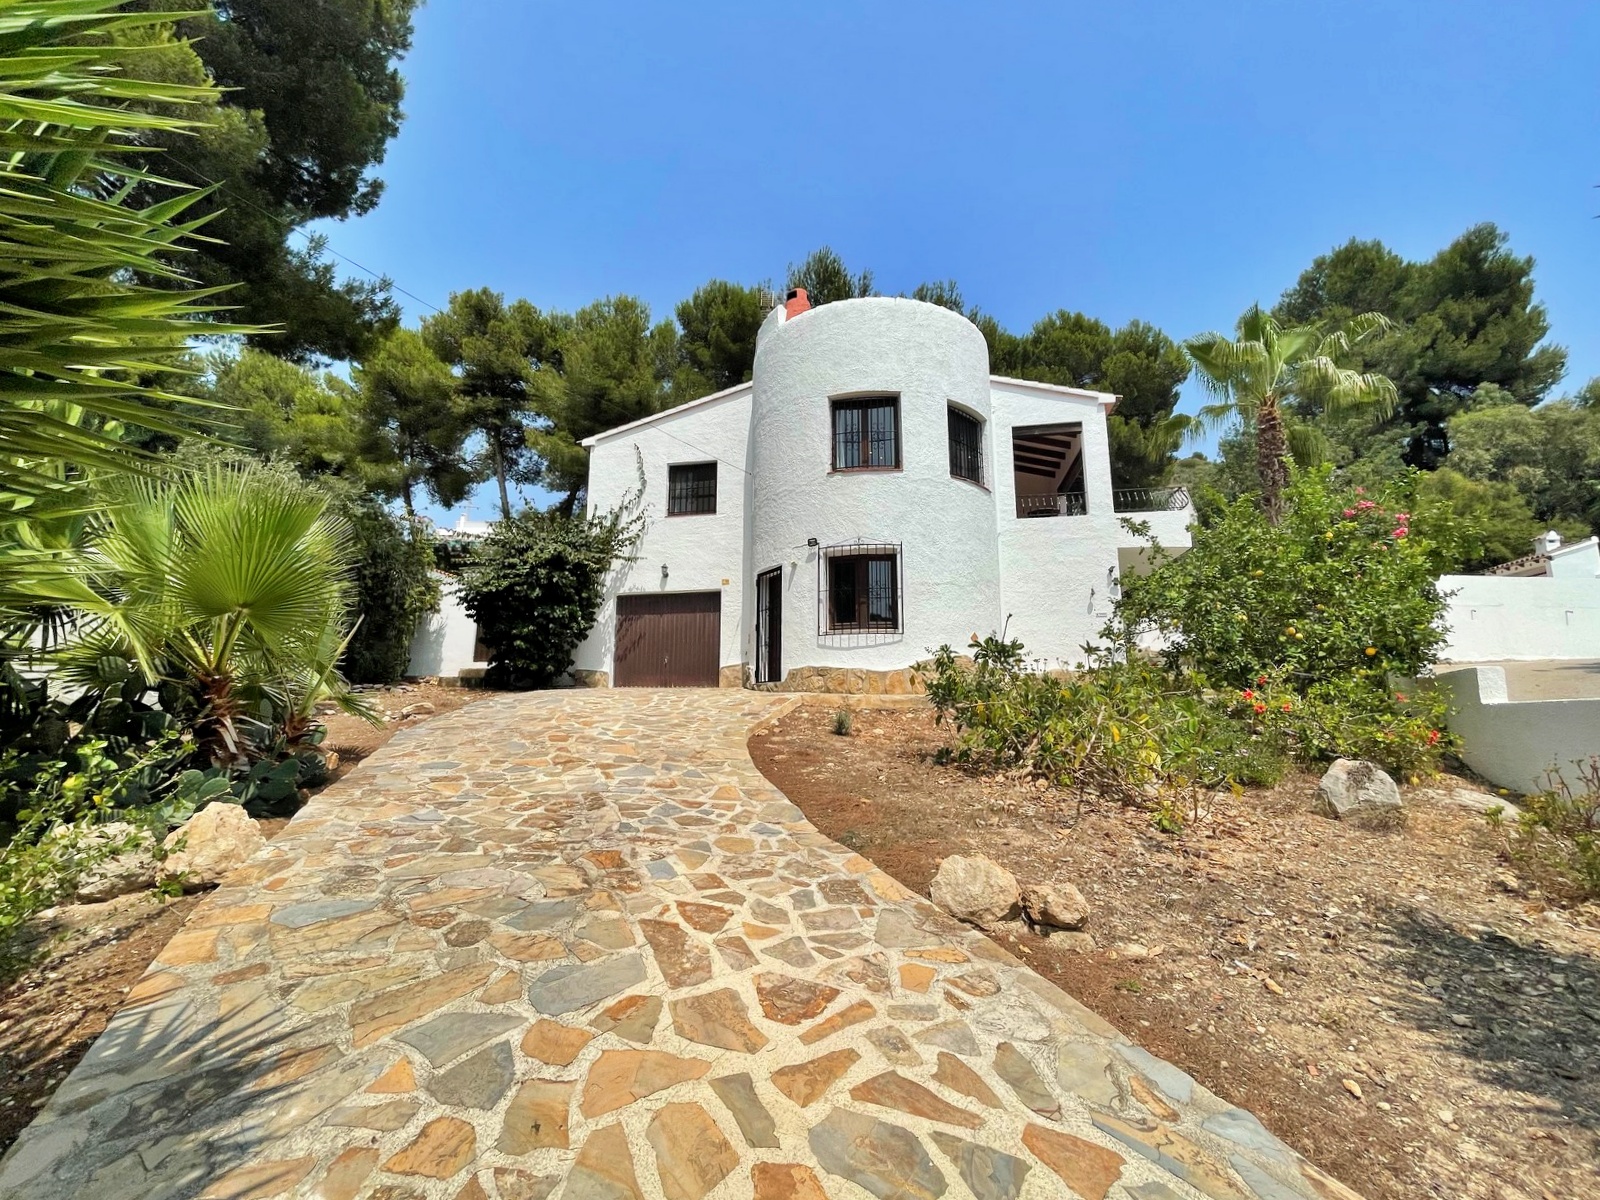 Sea view villa in Moraira for sale, walking distance to the beach